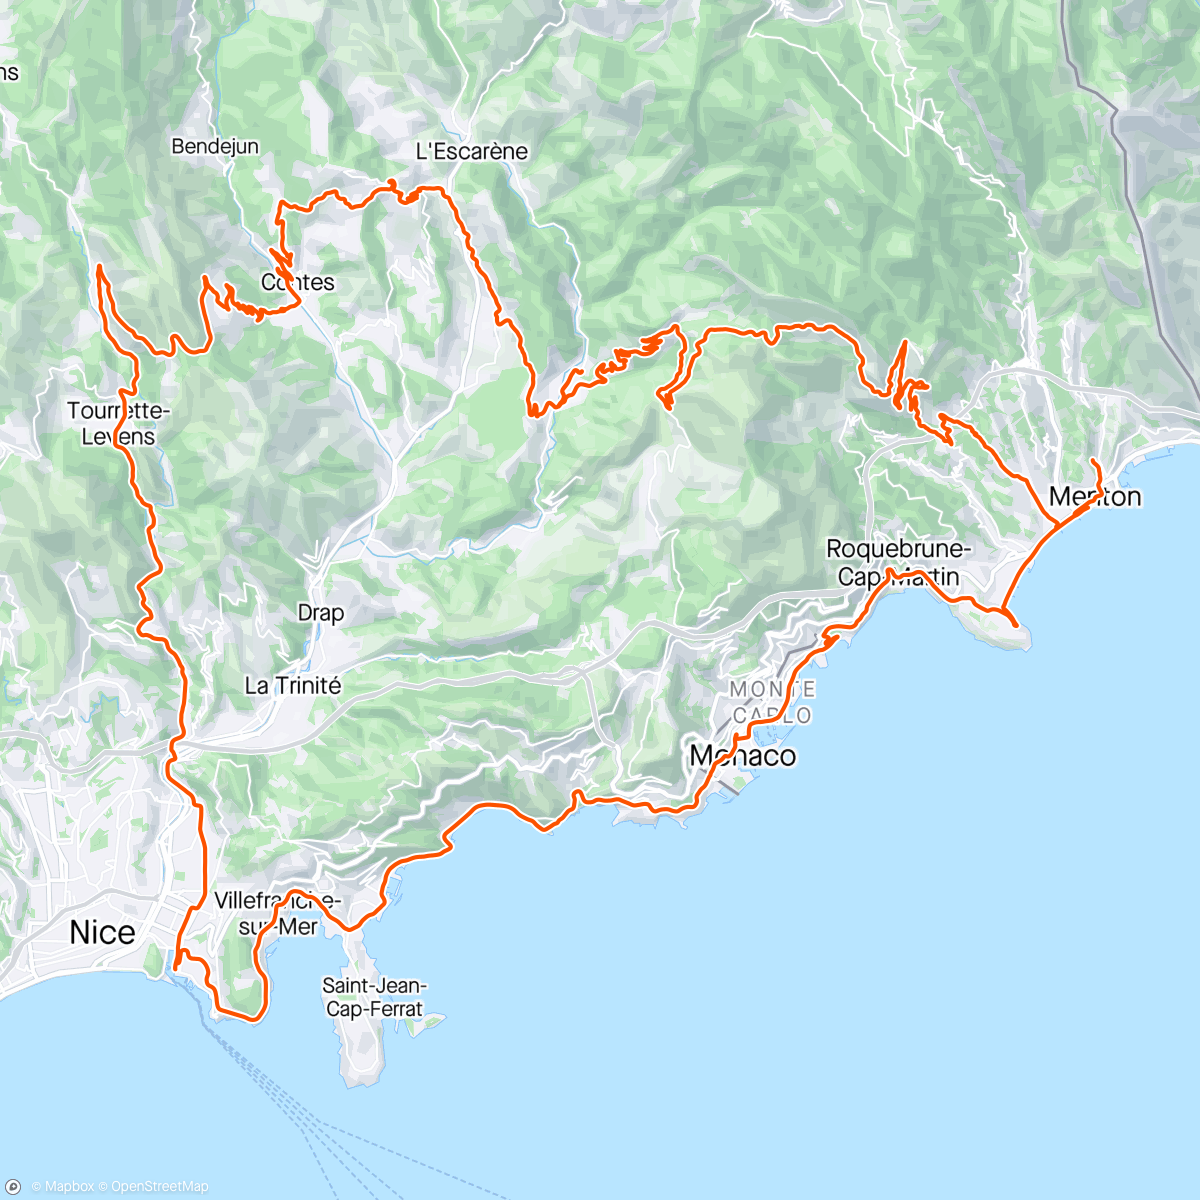 「Menton dag 3 - Col de Madone, Col de Chateauneauf, Nice og Monaco」活動的地圖